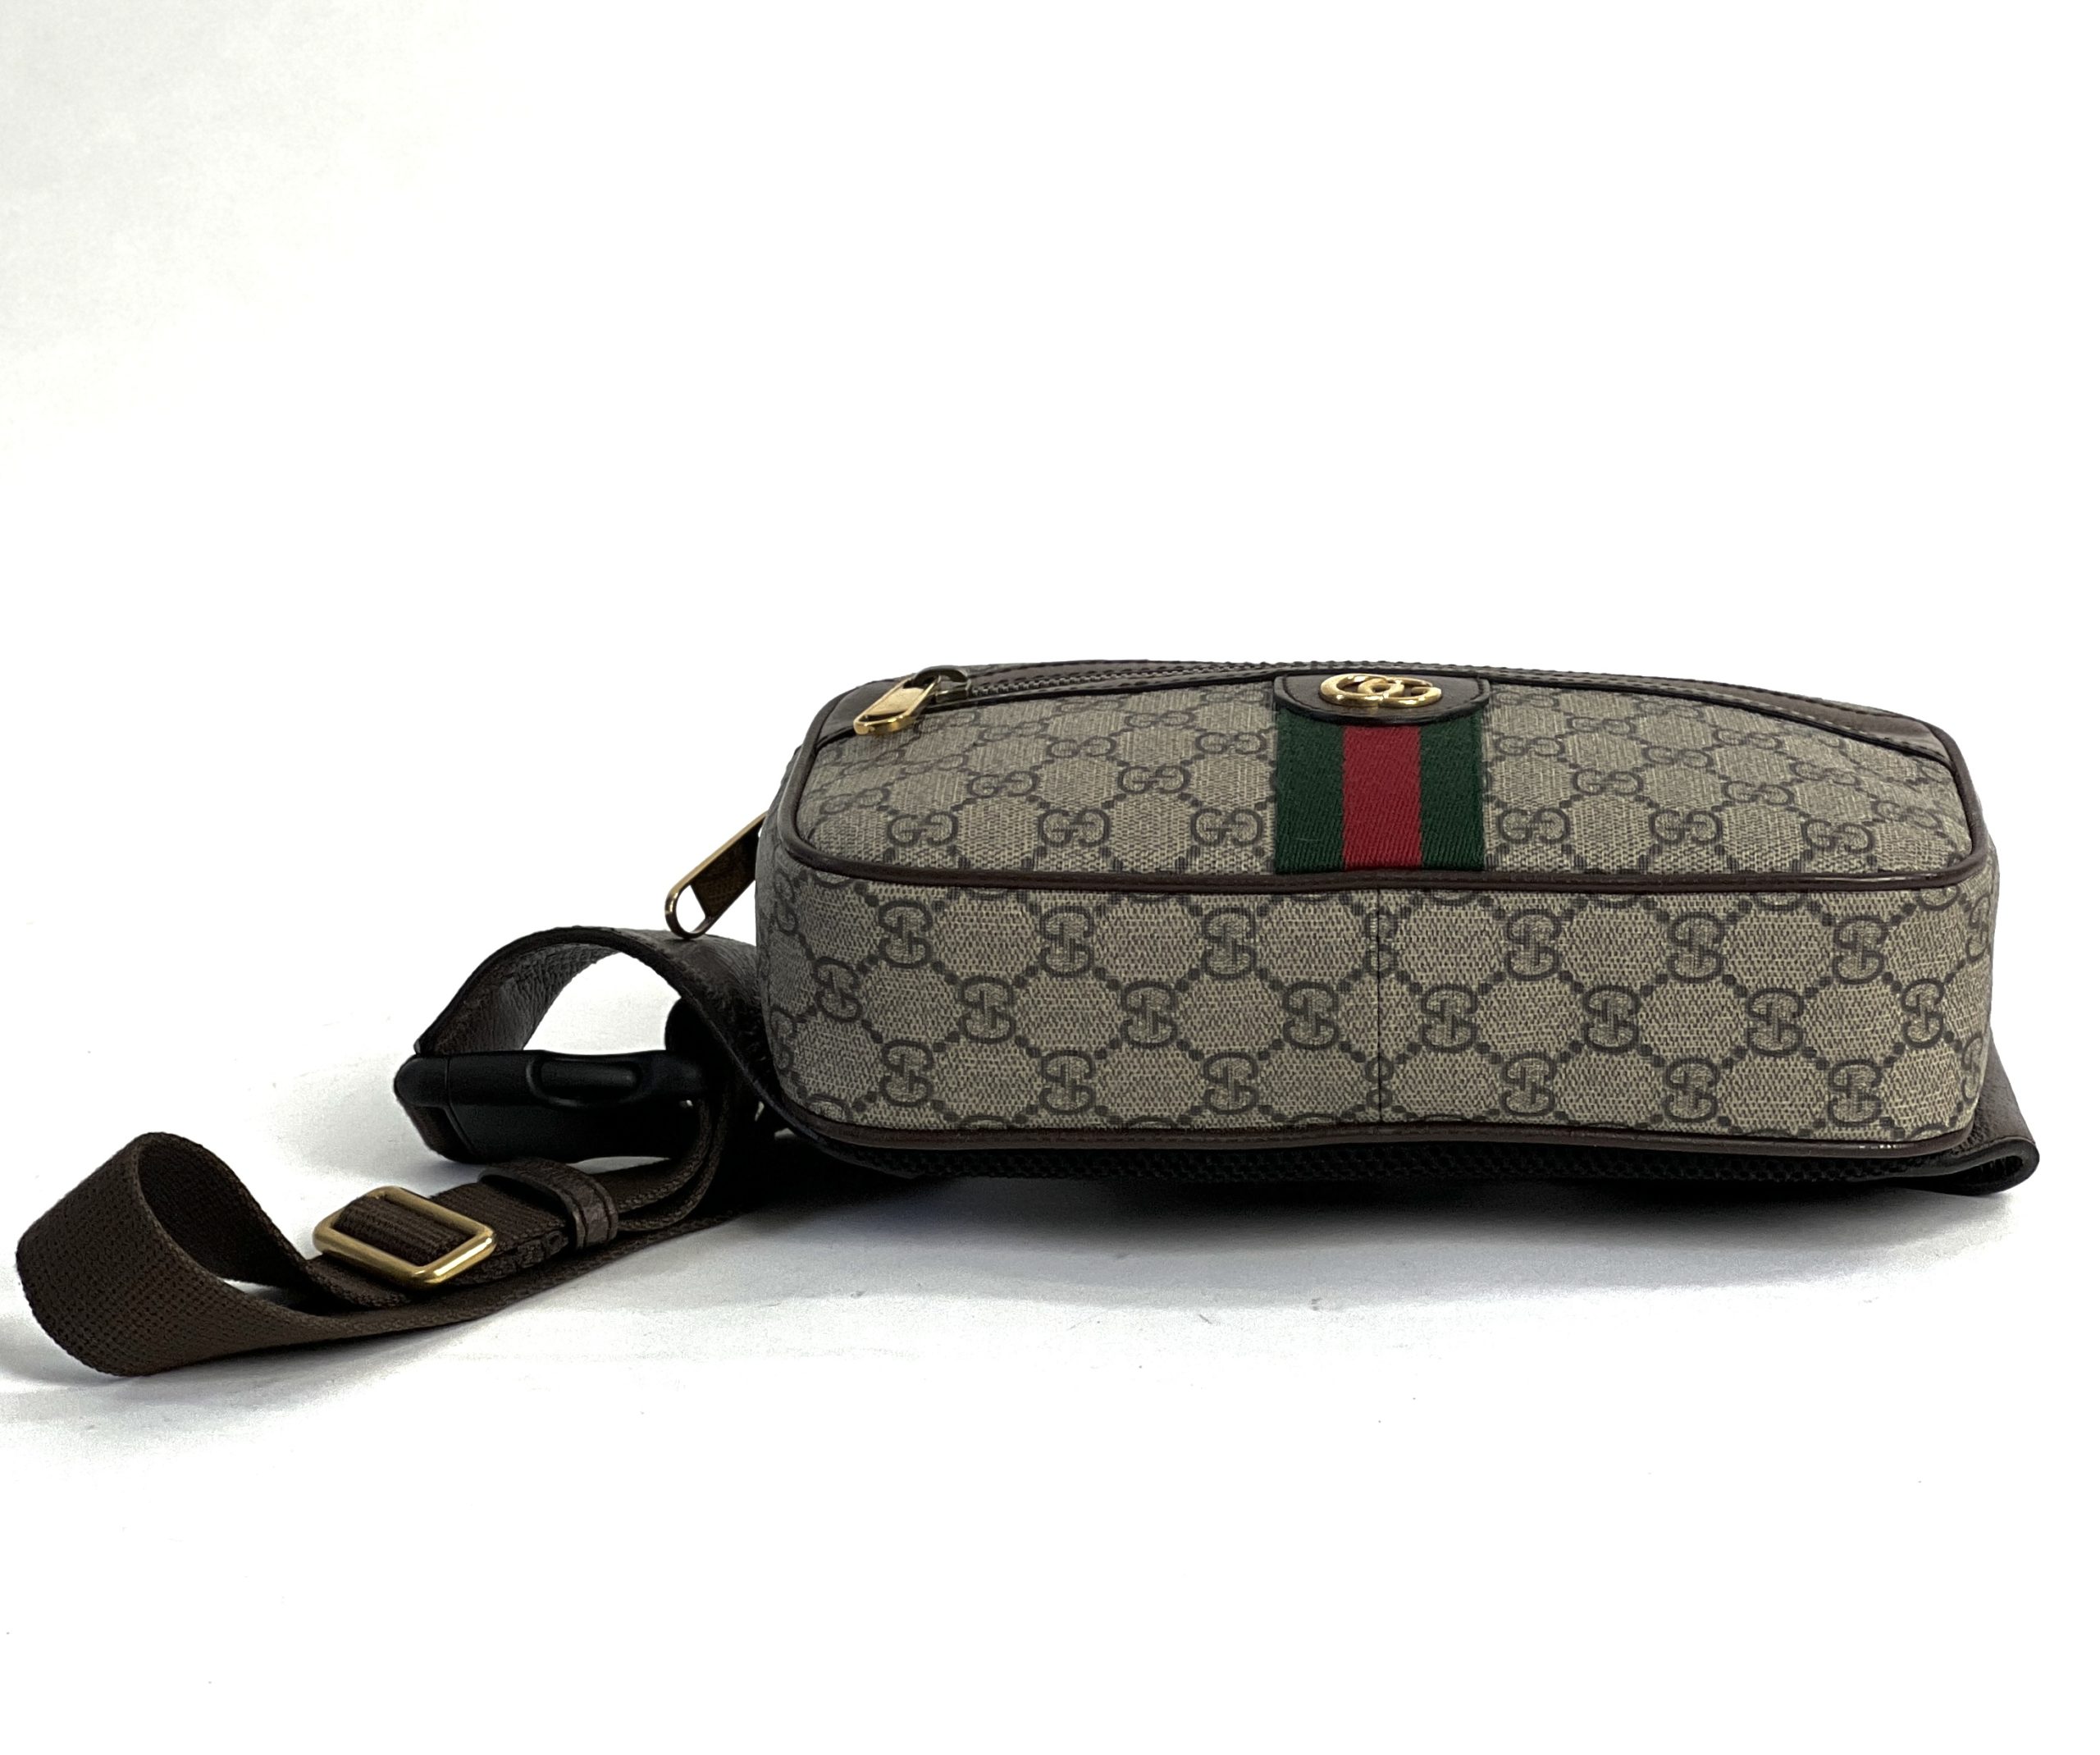 Gucci Opidia GG Small Belt Bag in Dark Grey